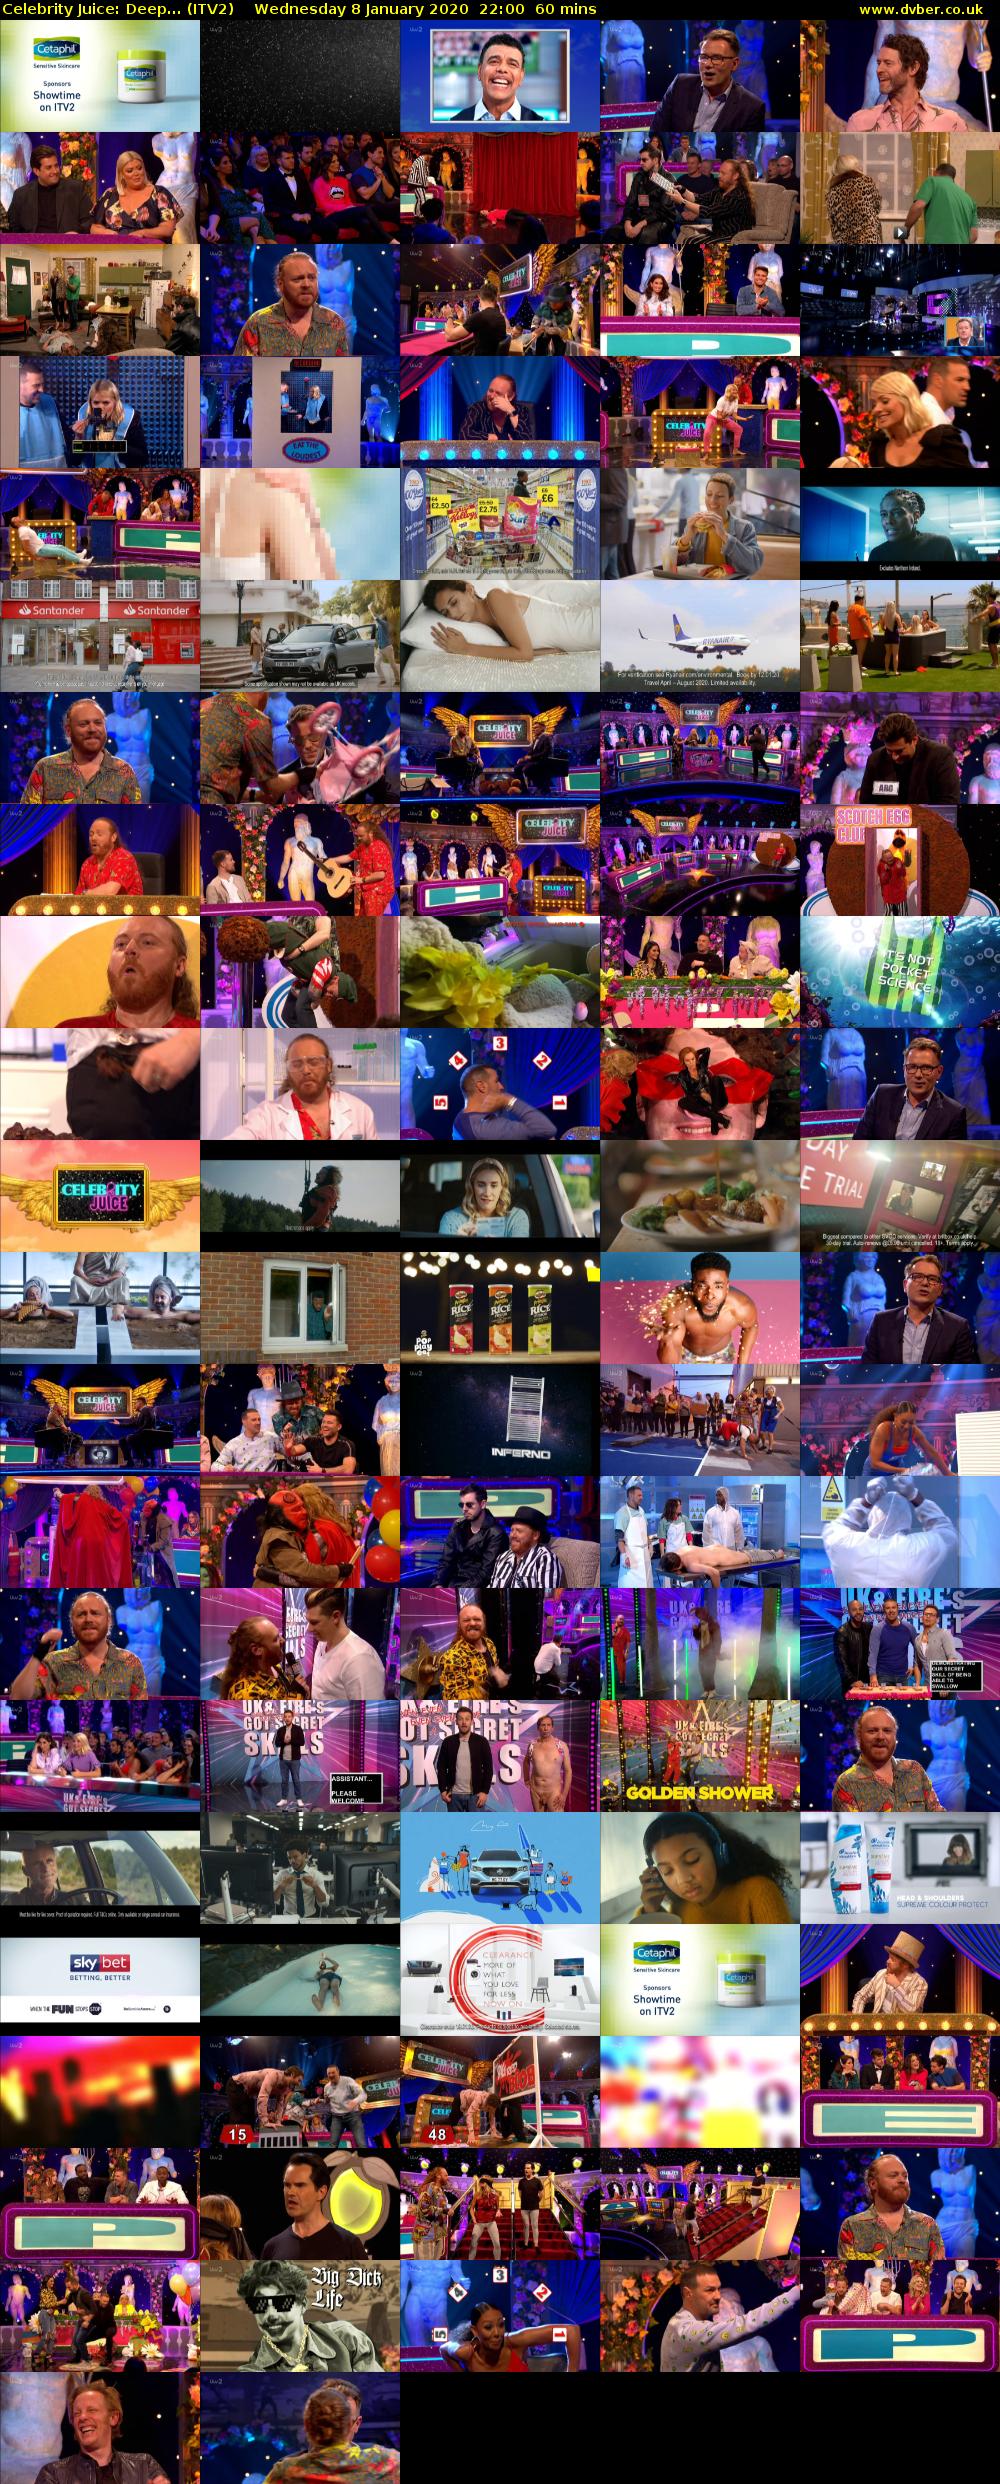 Celebrity Juice: Deep... (ITV2) Wednesday 8 January 2020 22:00 - 23:00